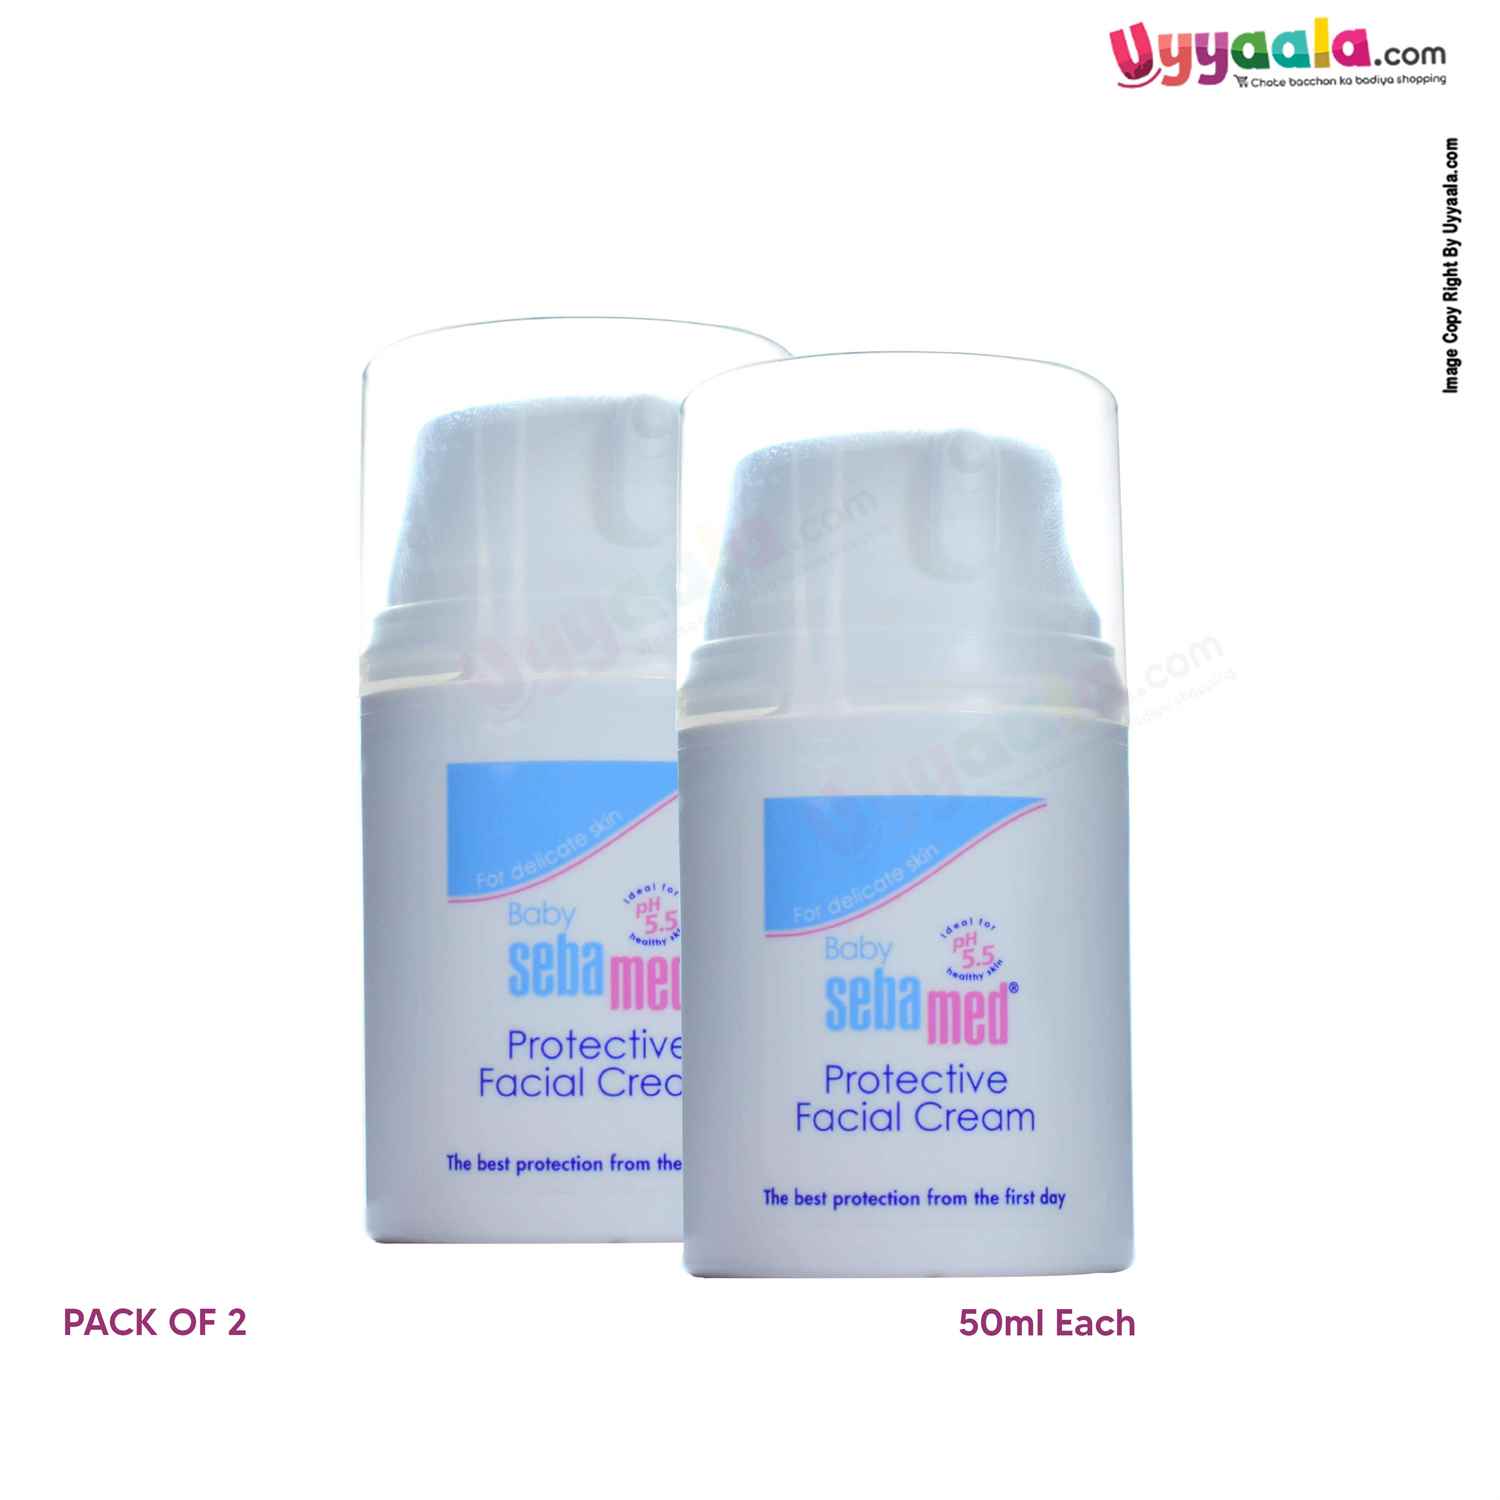 Sebamed Baby Protective Facial Cream - 50 ml (pack of 2)